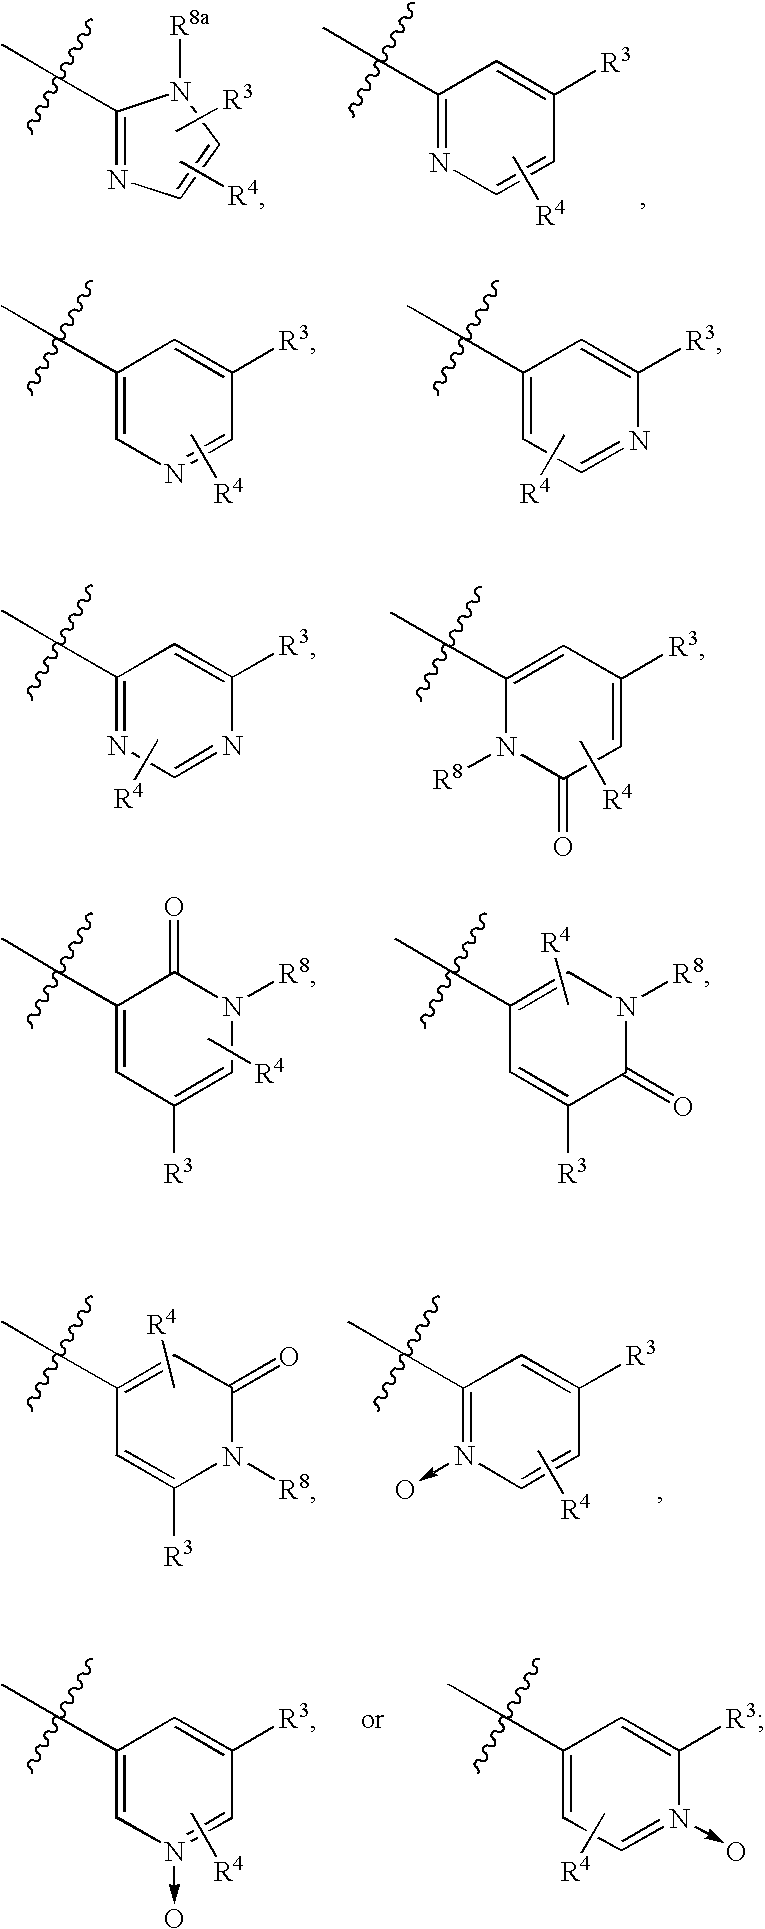 Arylpropionamide, arylacrylamide, arylpropynamide, or arylmethylurea analogs as factor xia inhibitors